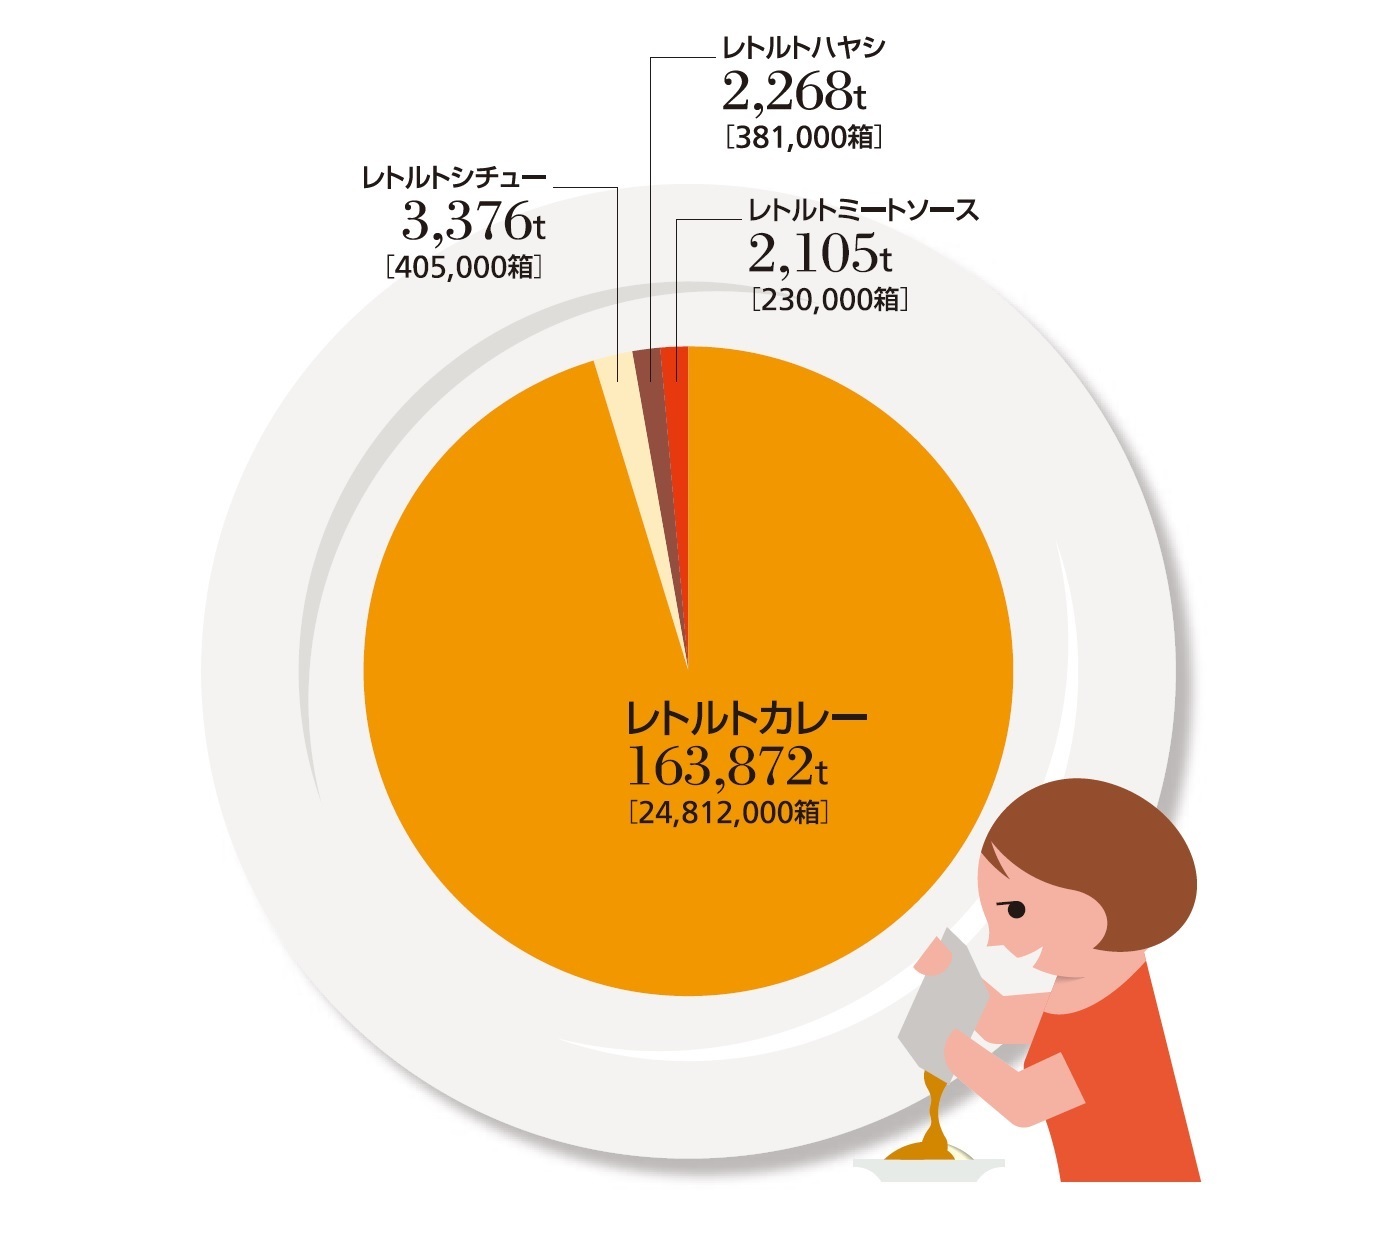 Infocalendar －レトルト食品の国内生産数量|2019年[1月22日はカレーの日]　